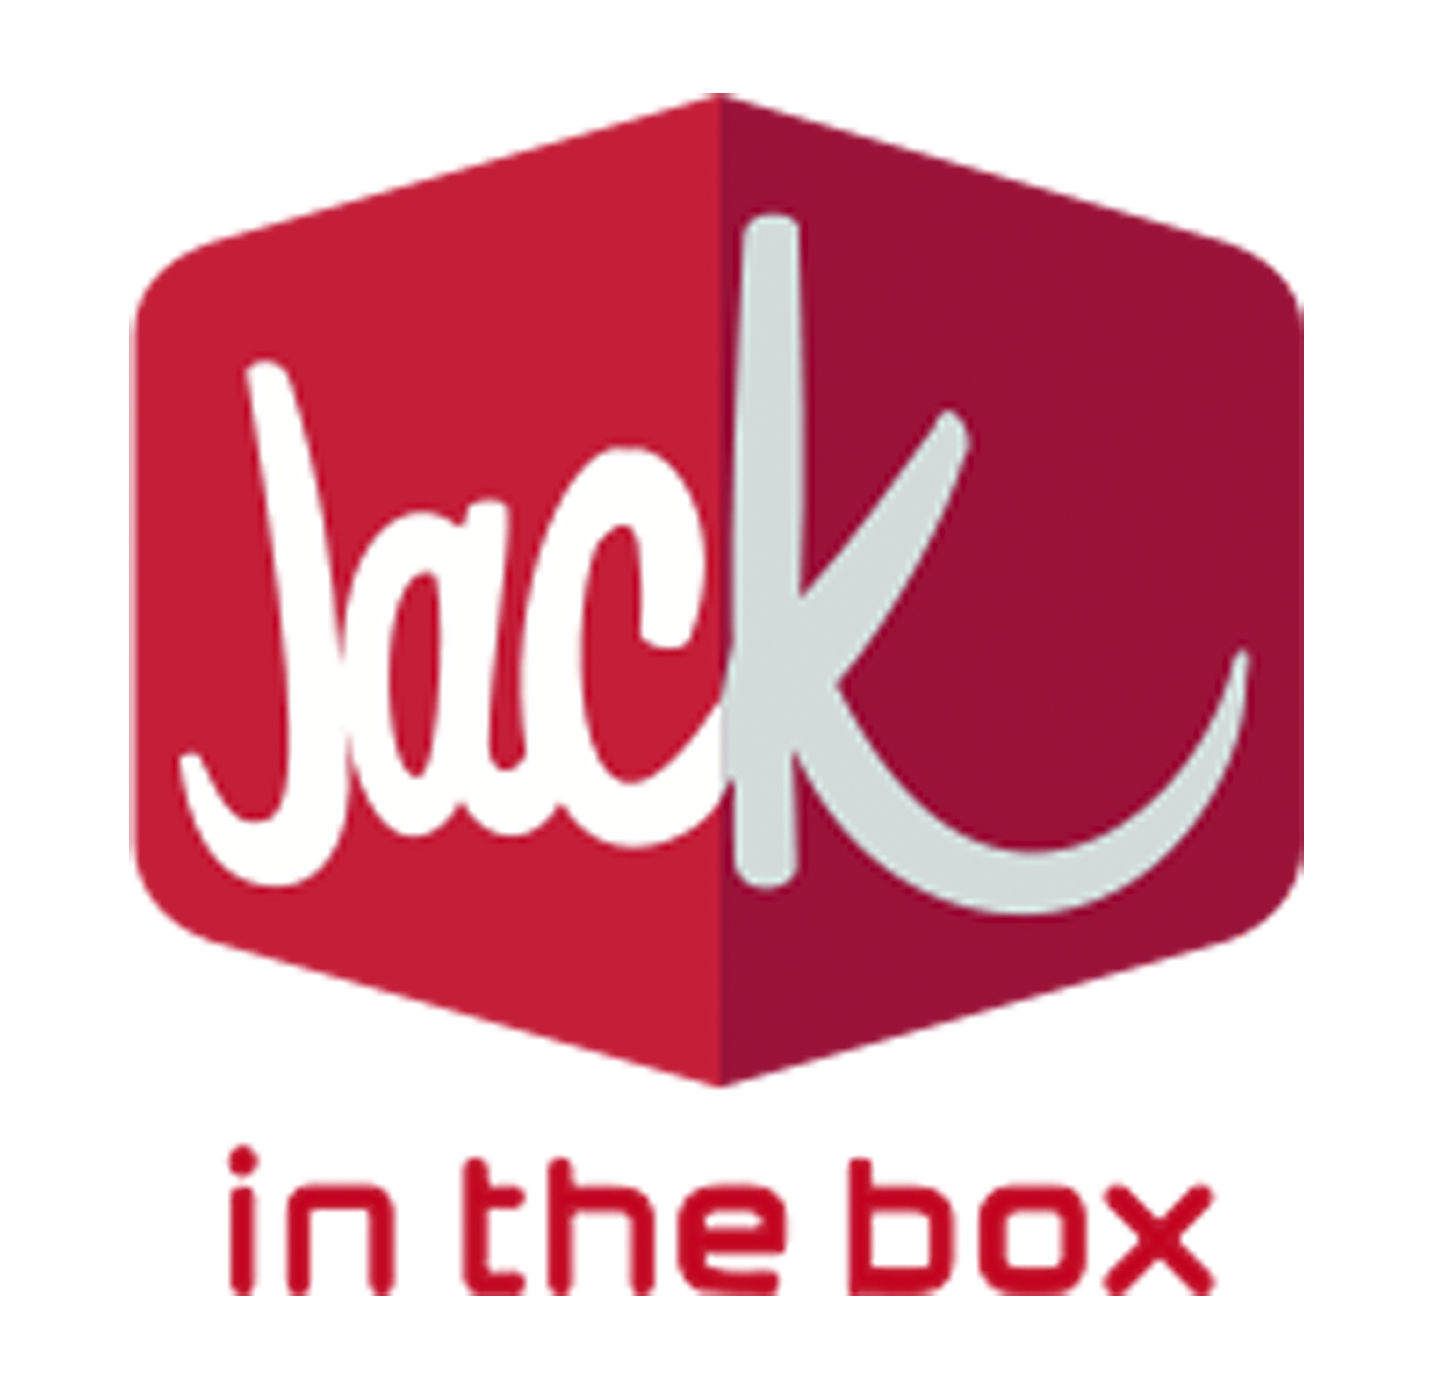 Jack in the box | Antonio Designs